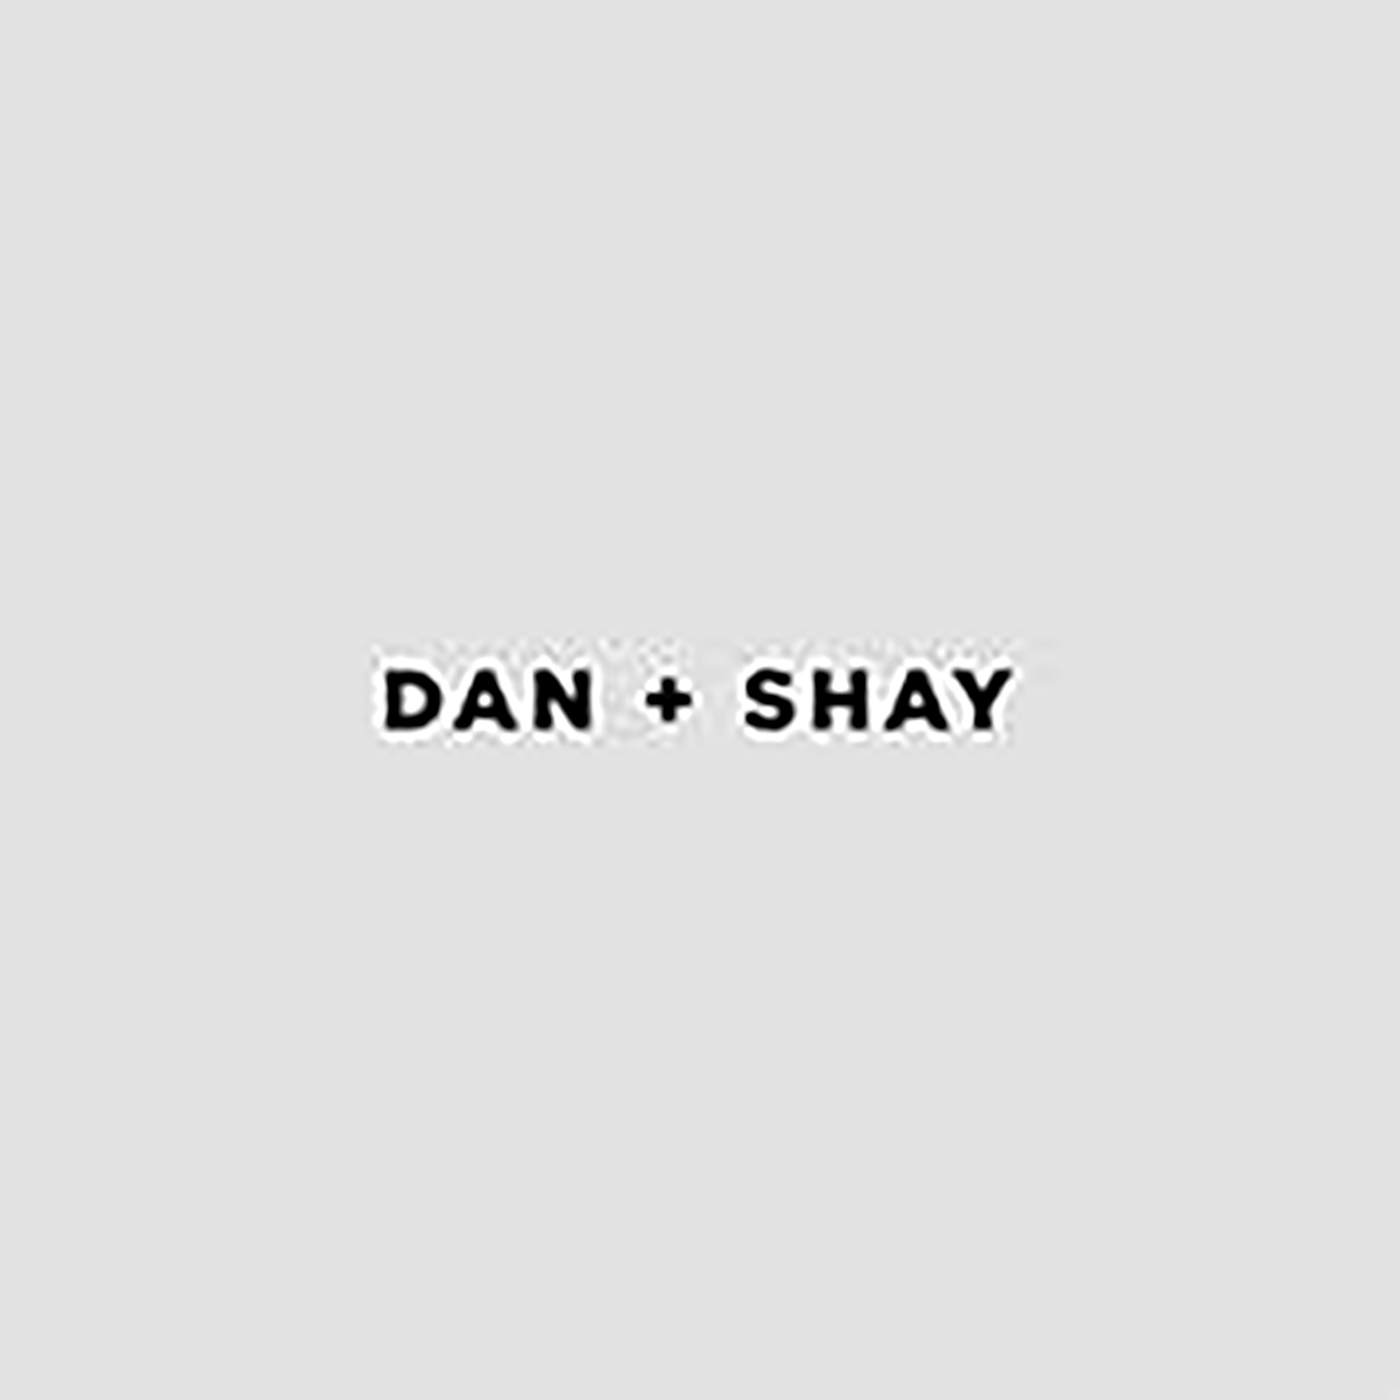 DAN + SHAY CD